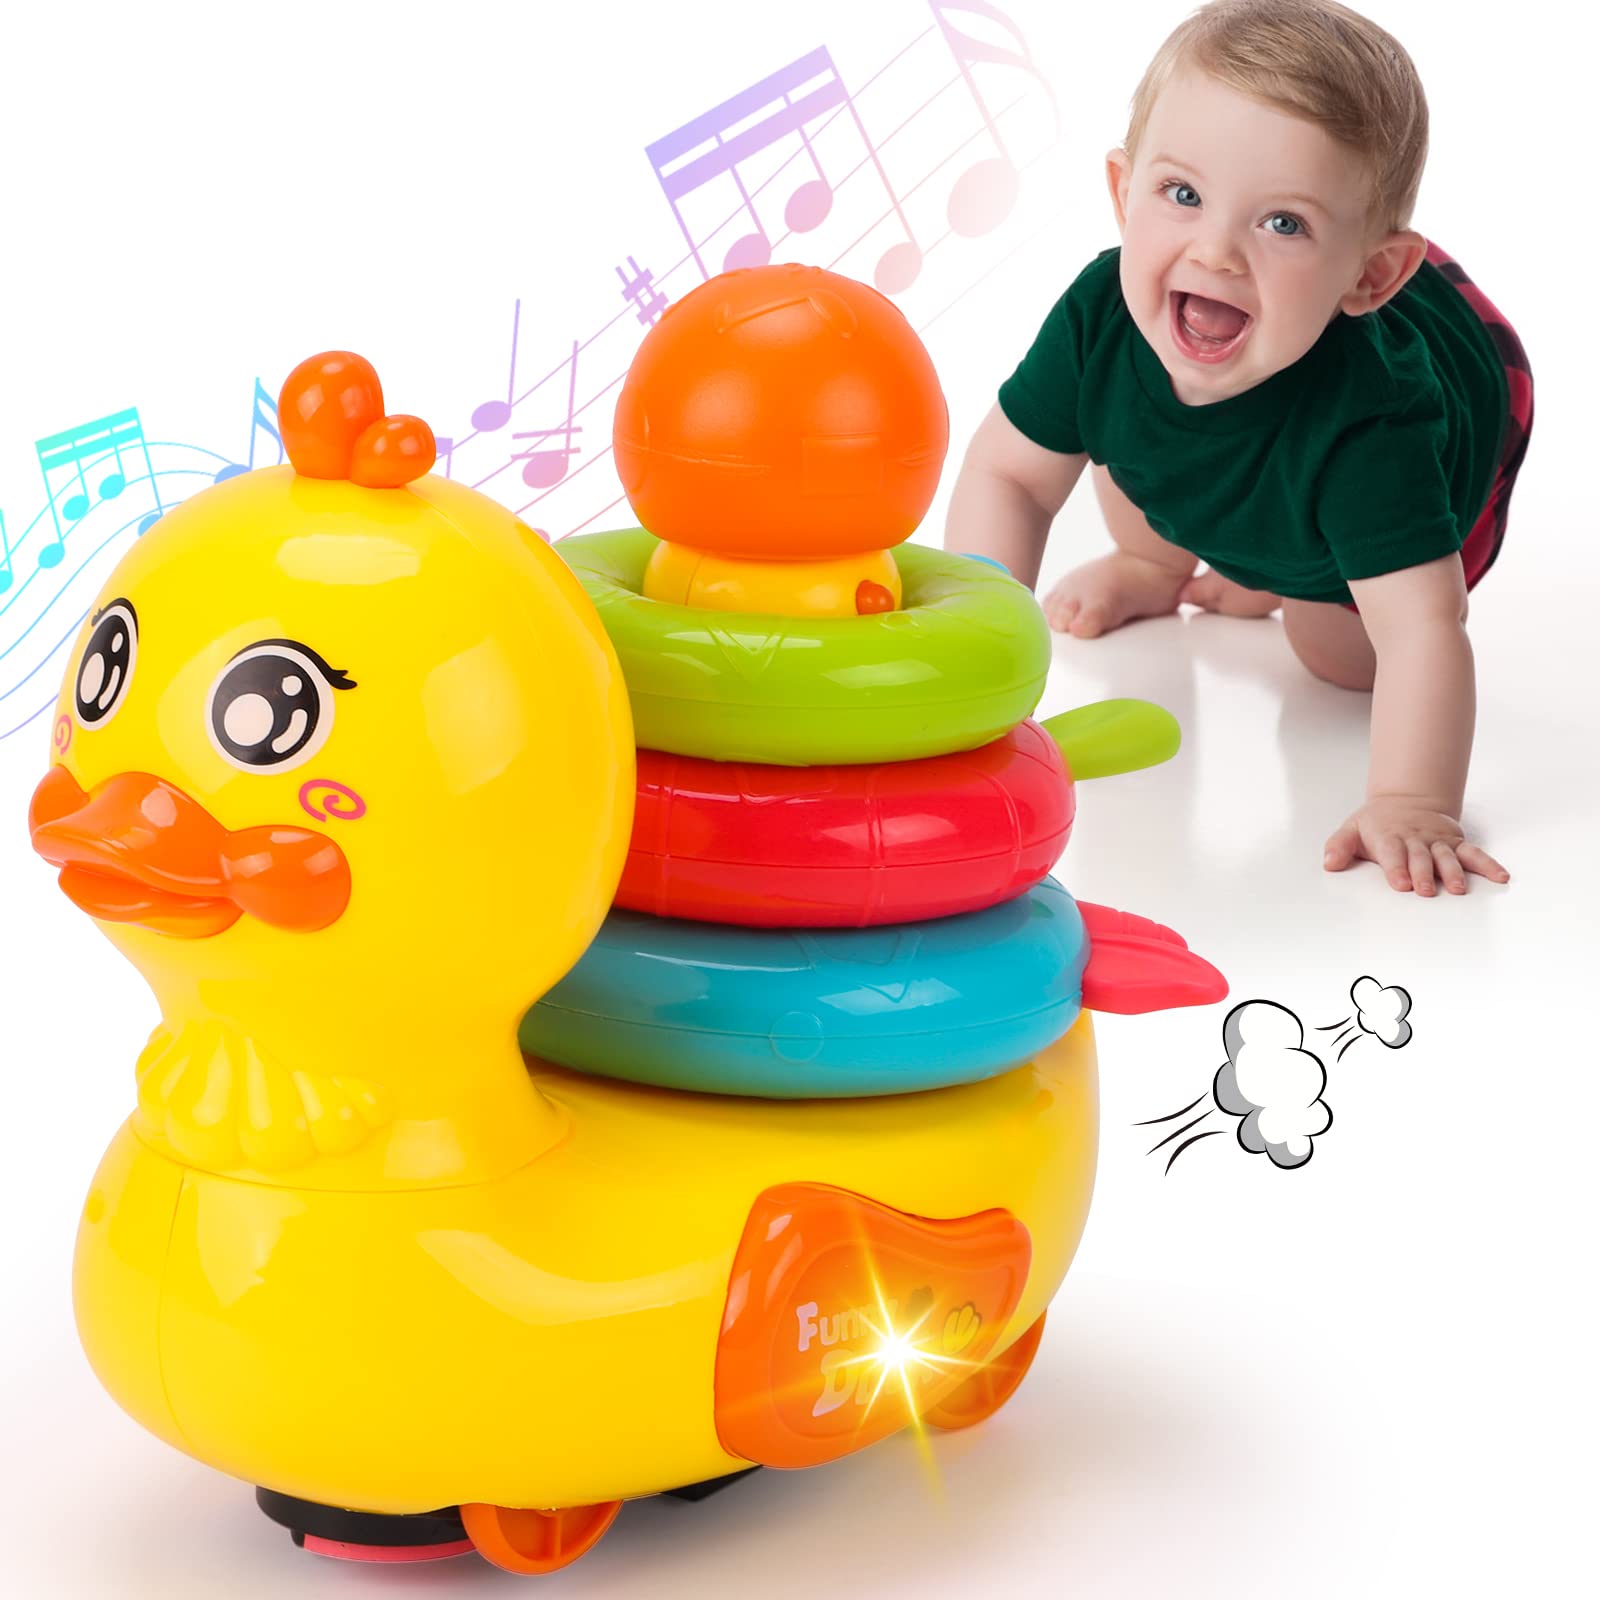 Qizebaby 赤ちゃん・幼児のおもちゃ、音楽這うダック、シミュレーションダックおもちゃ、自動的に障害物を回避する、スタッキングトイ、